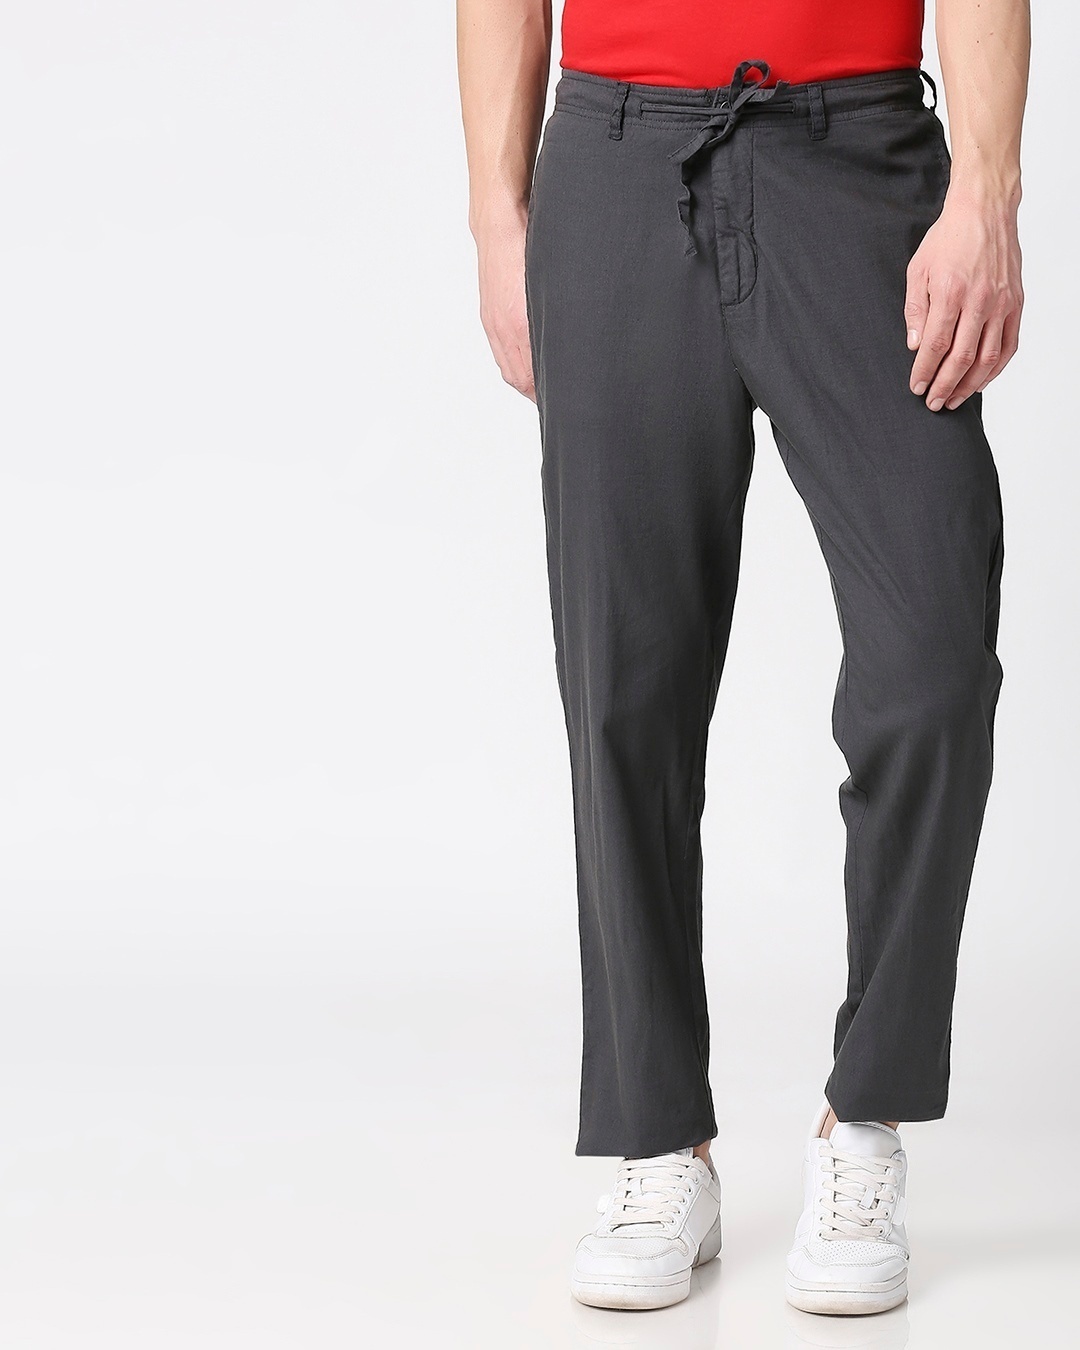 Shop Charcoal Grey Casual Cotton Pants-Back